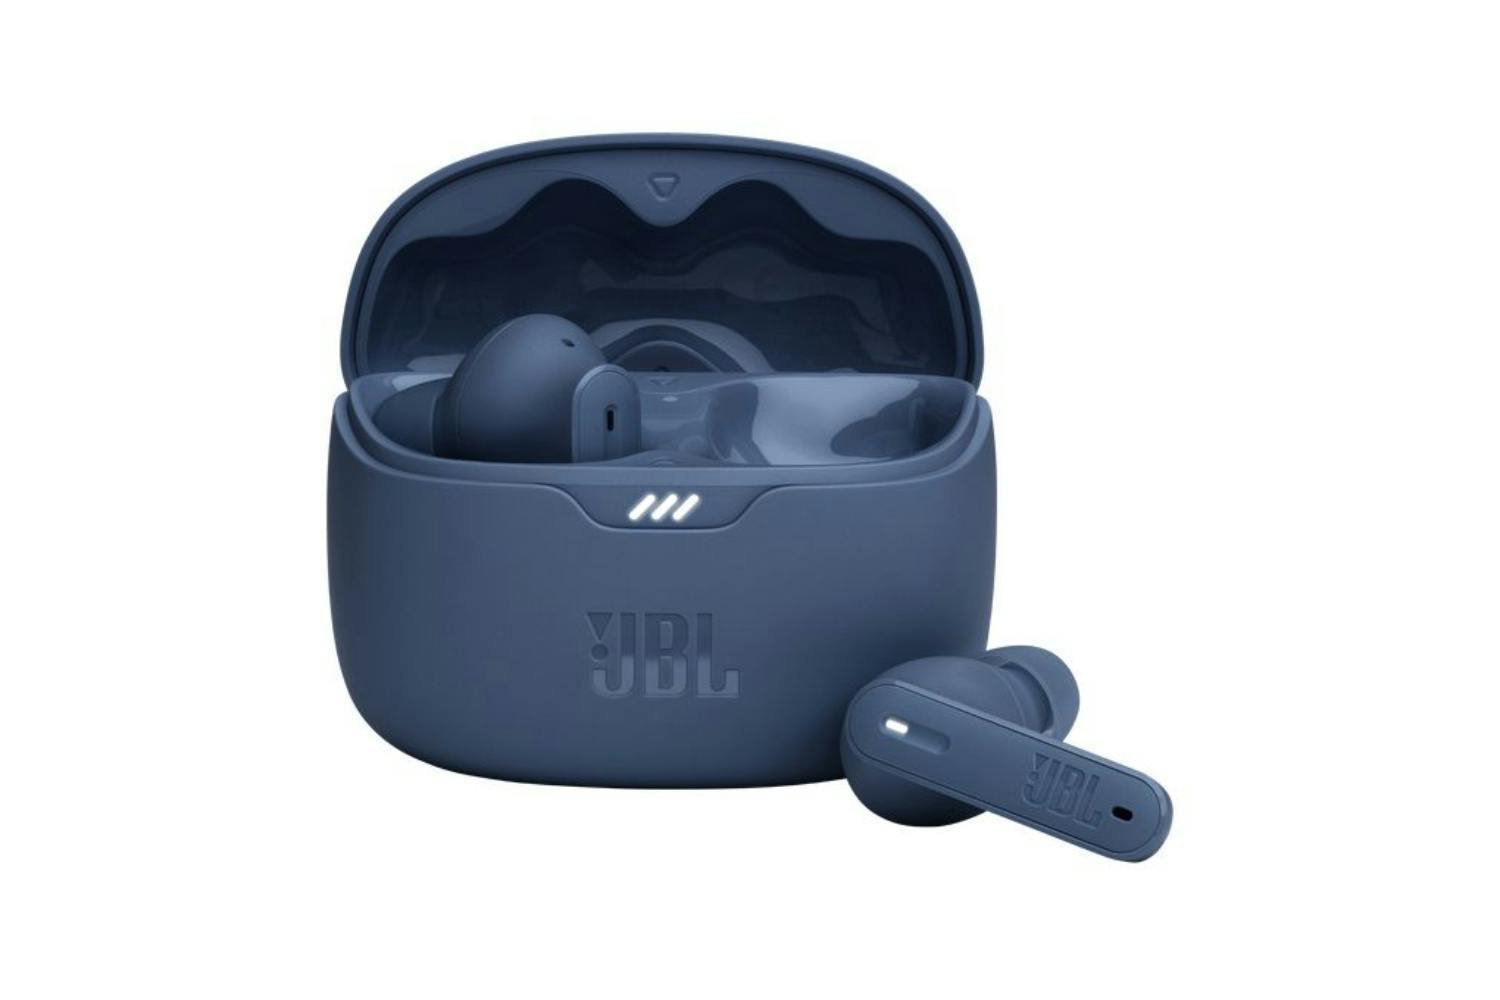 Blu Tech Elite Portable Water Softener –